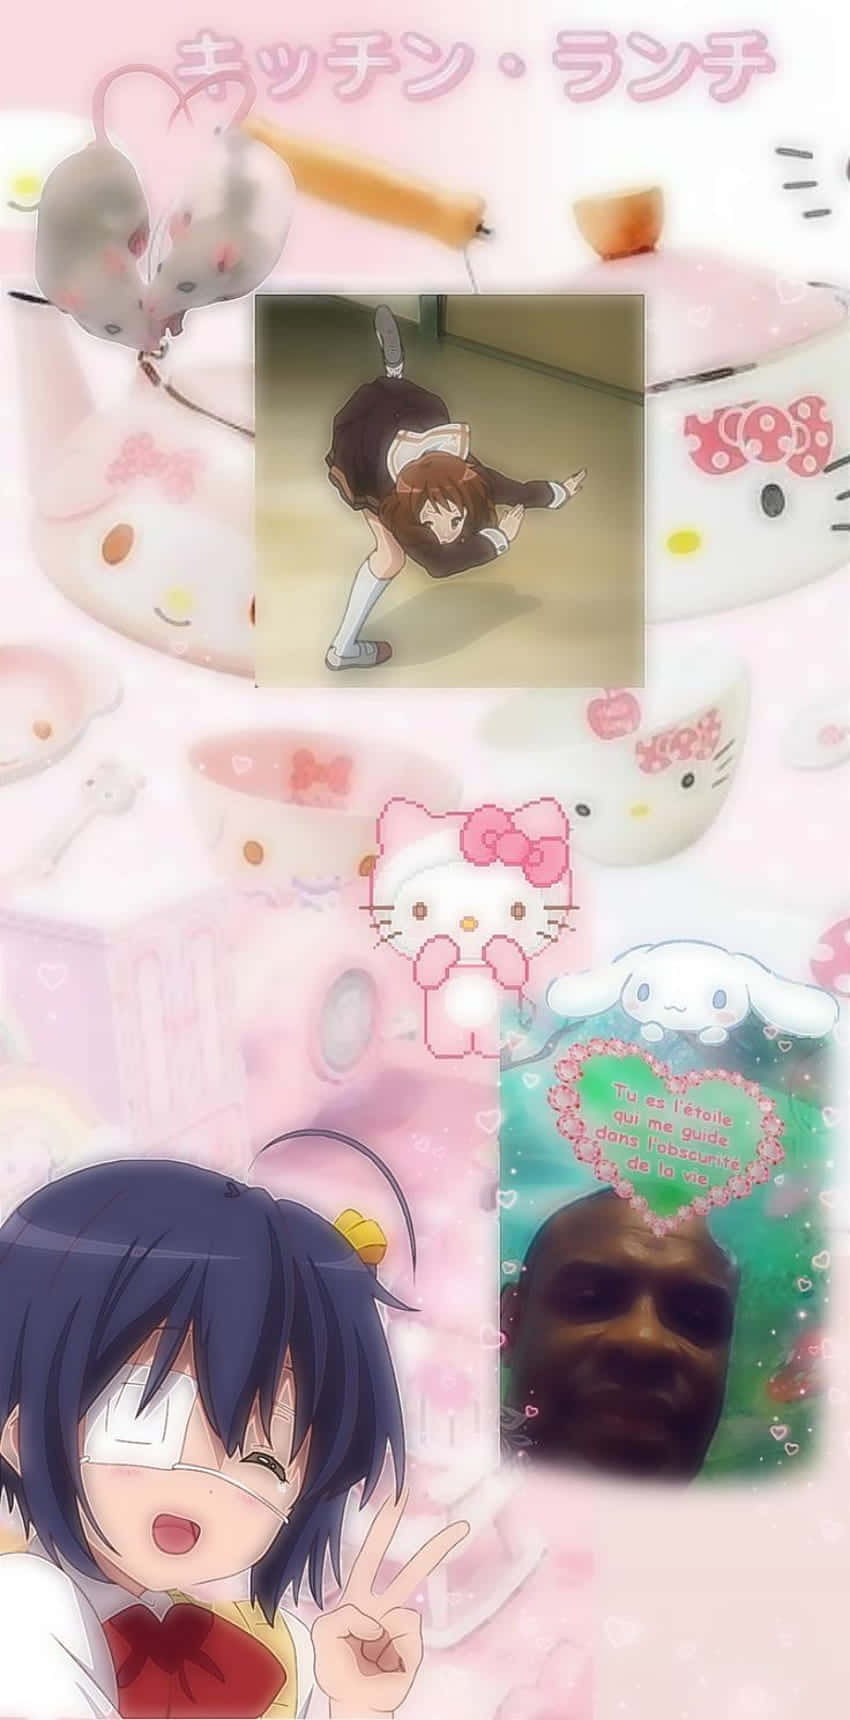 Kawaii Collage_ Anime Characters And Cute Mascots.jpg Wallpaper